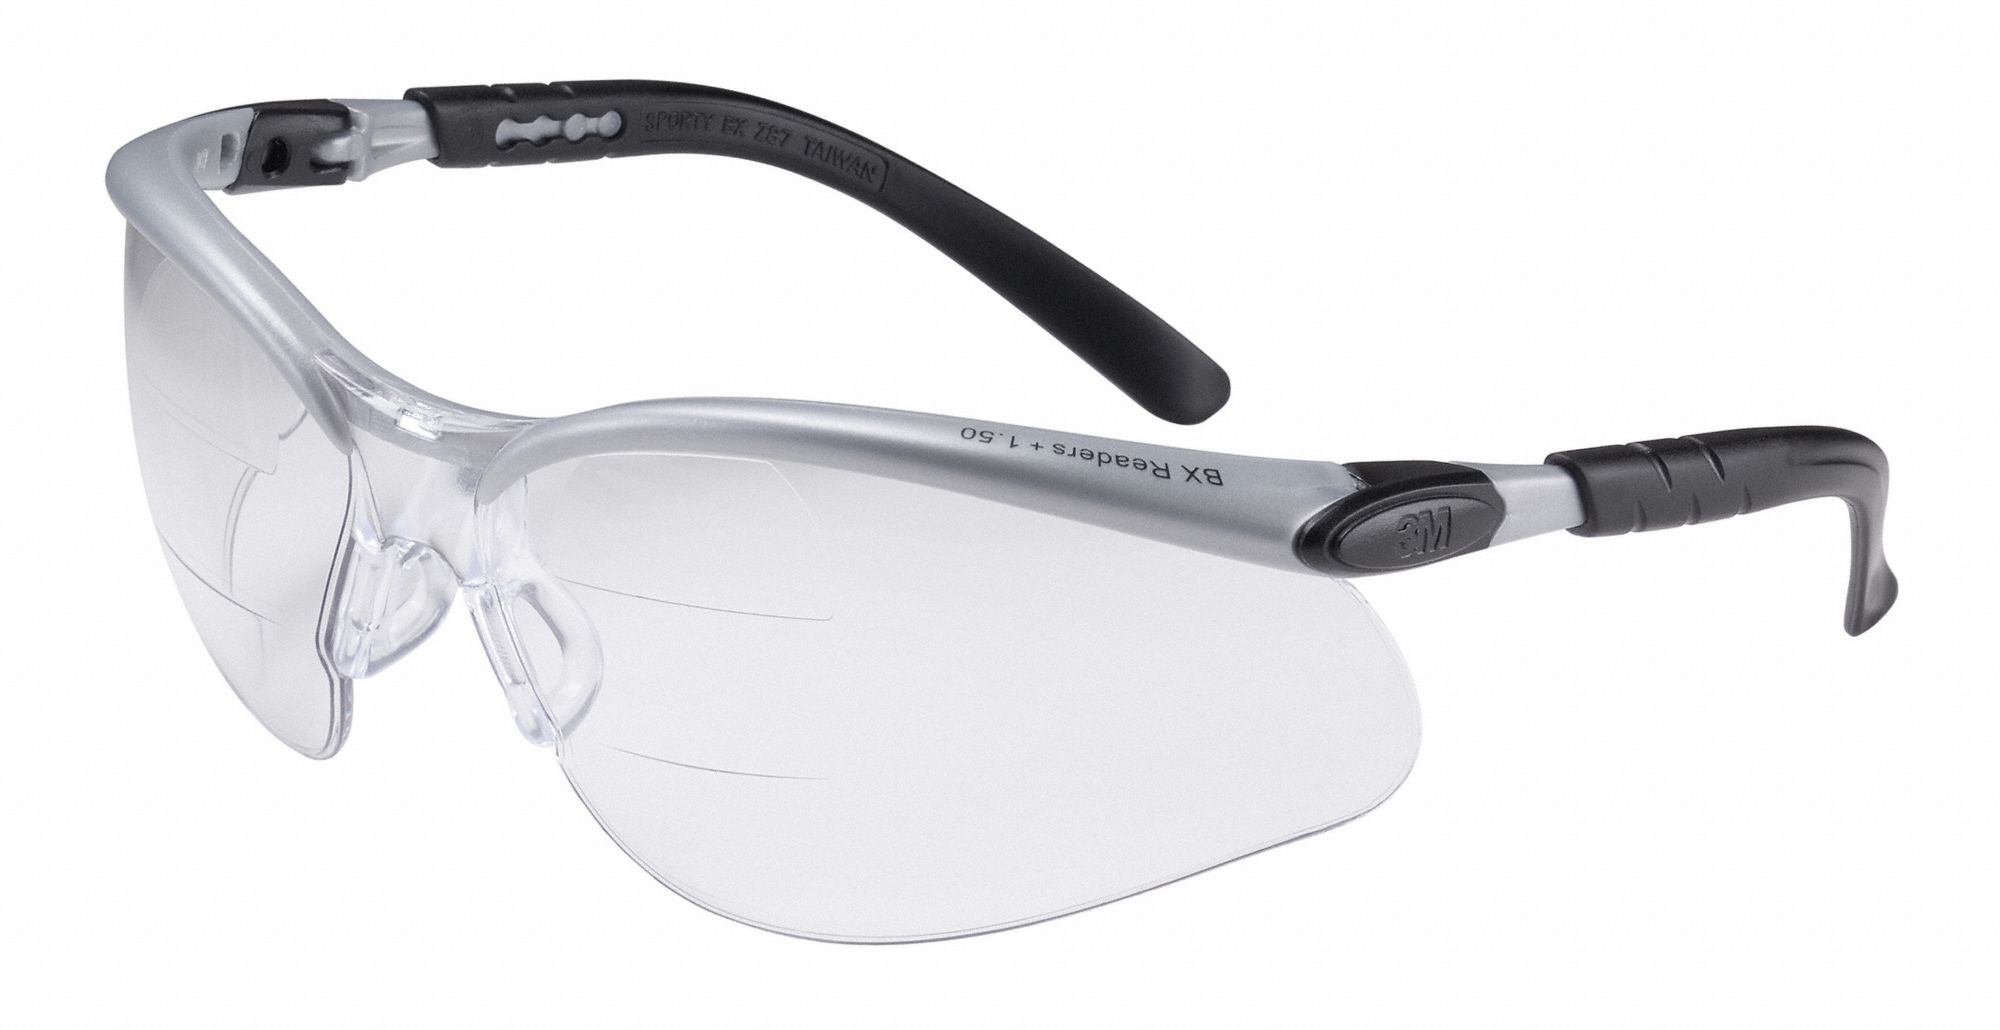 3m Bifocal Safety Reading Glasses Anti Fog Anti Static No Foam Lining Wraparound Frame 2